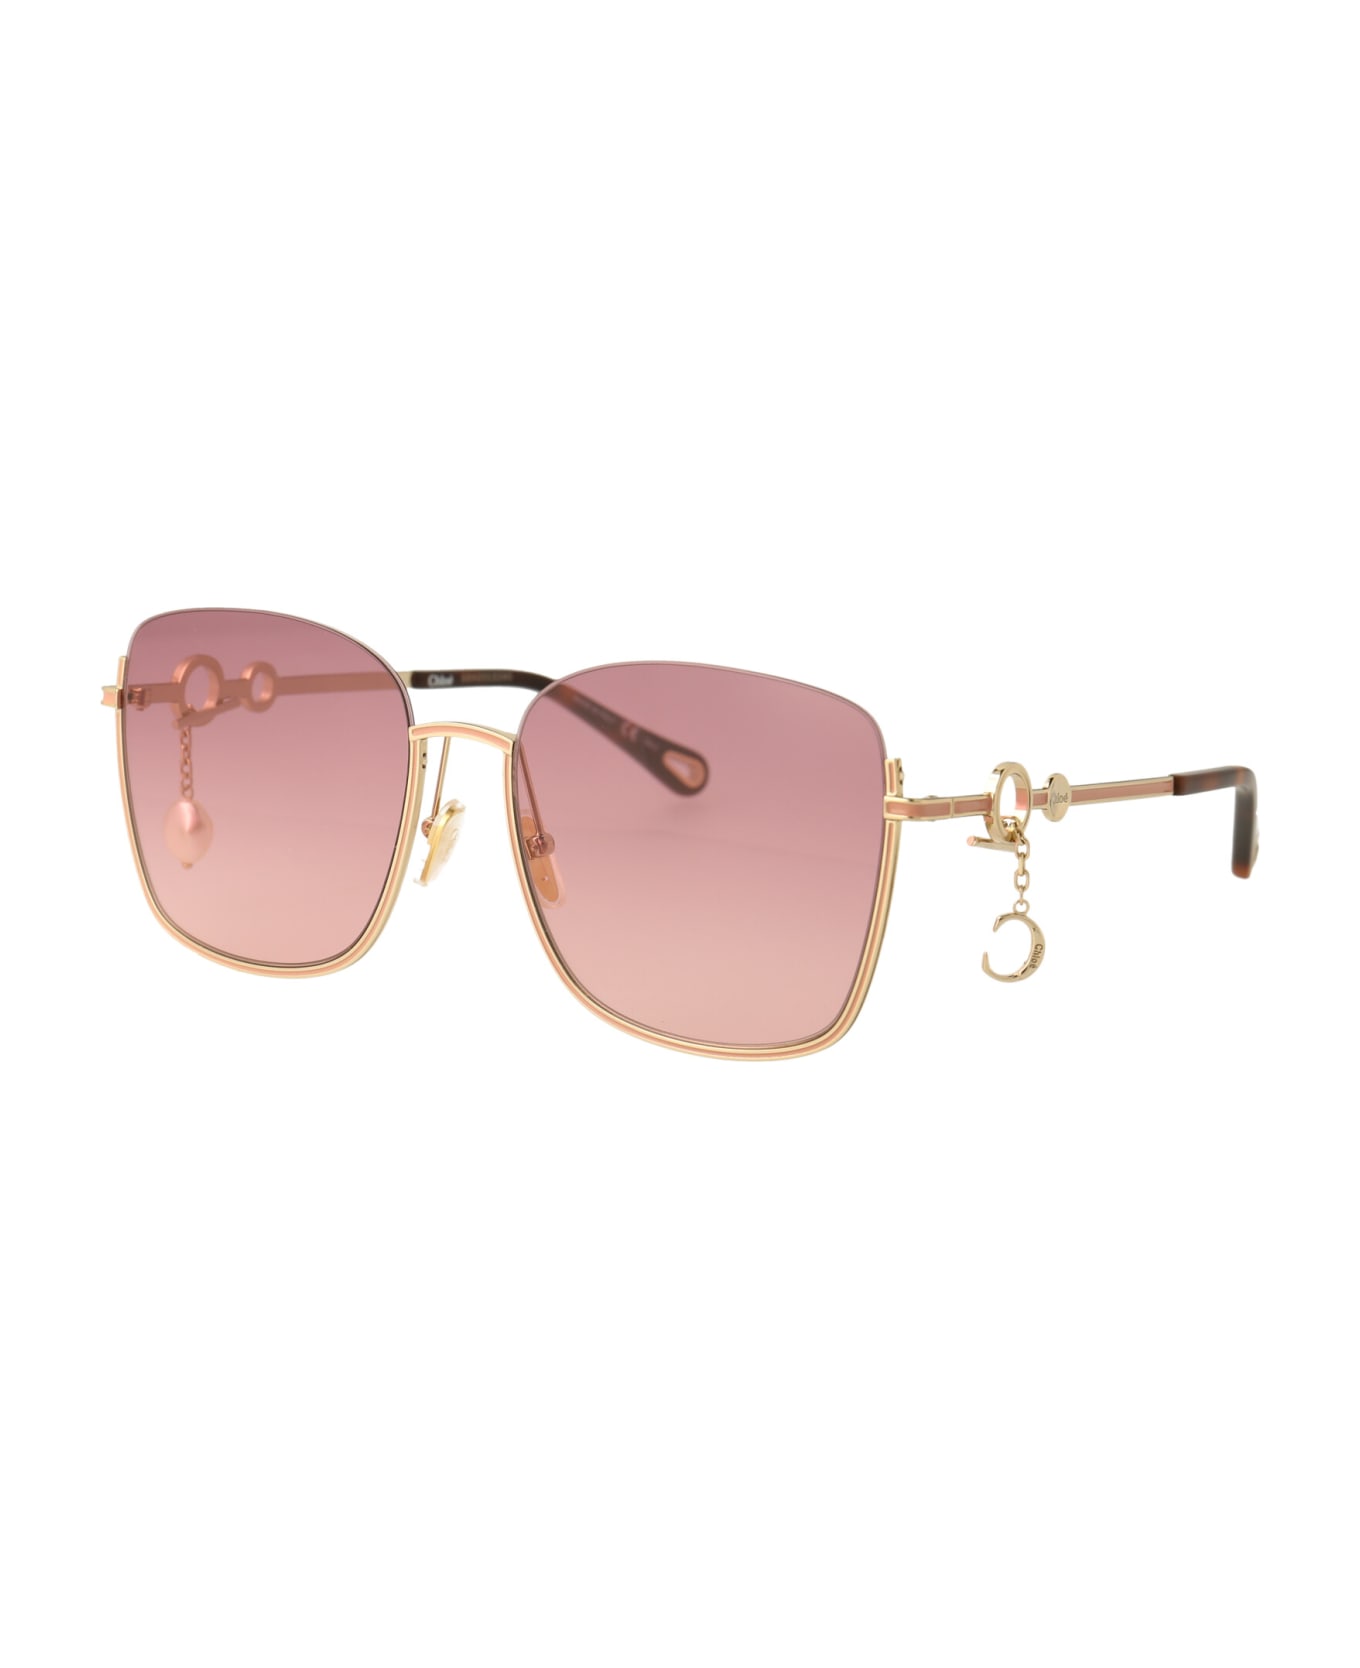 Chloé Eyewear Ch0070sk Sunglasses - 004 GOLD GOLD PINK